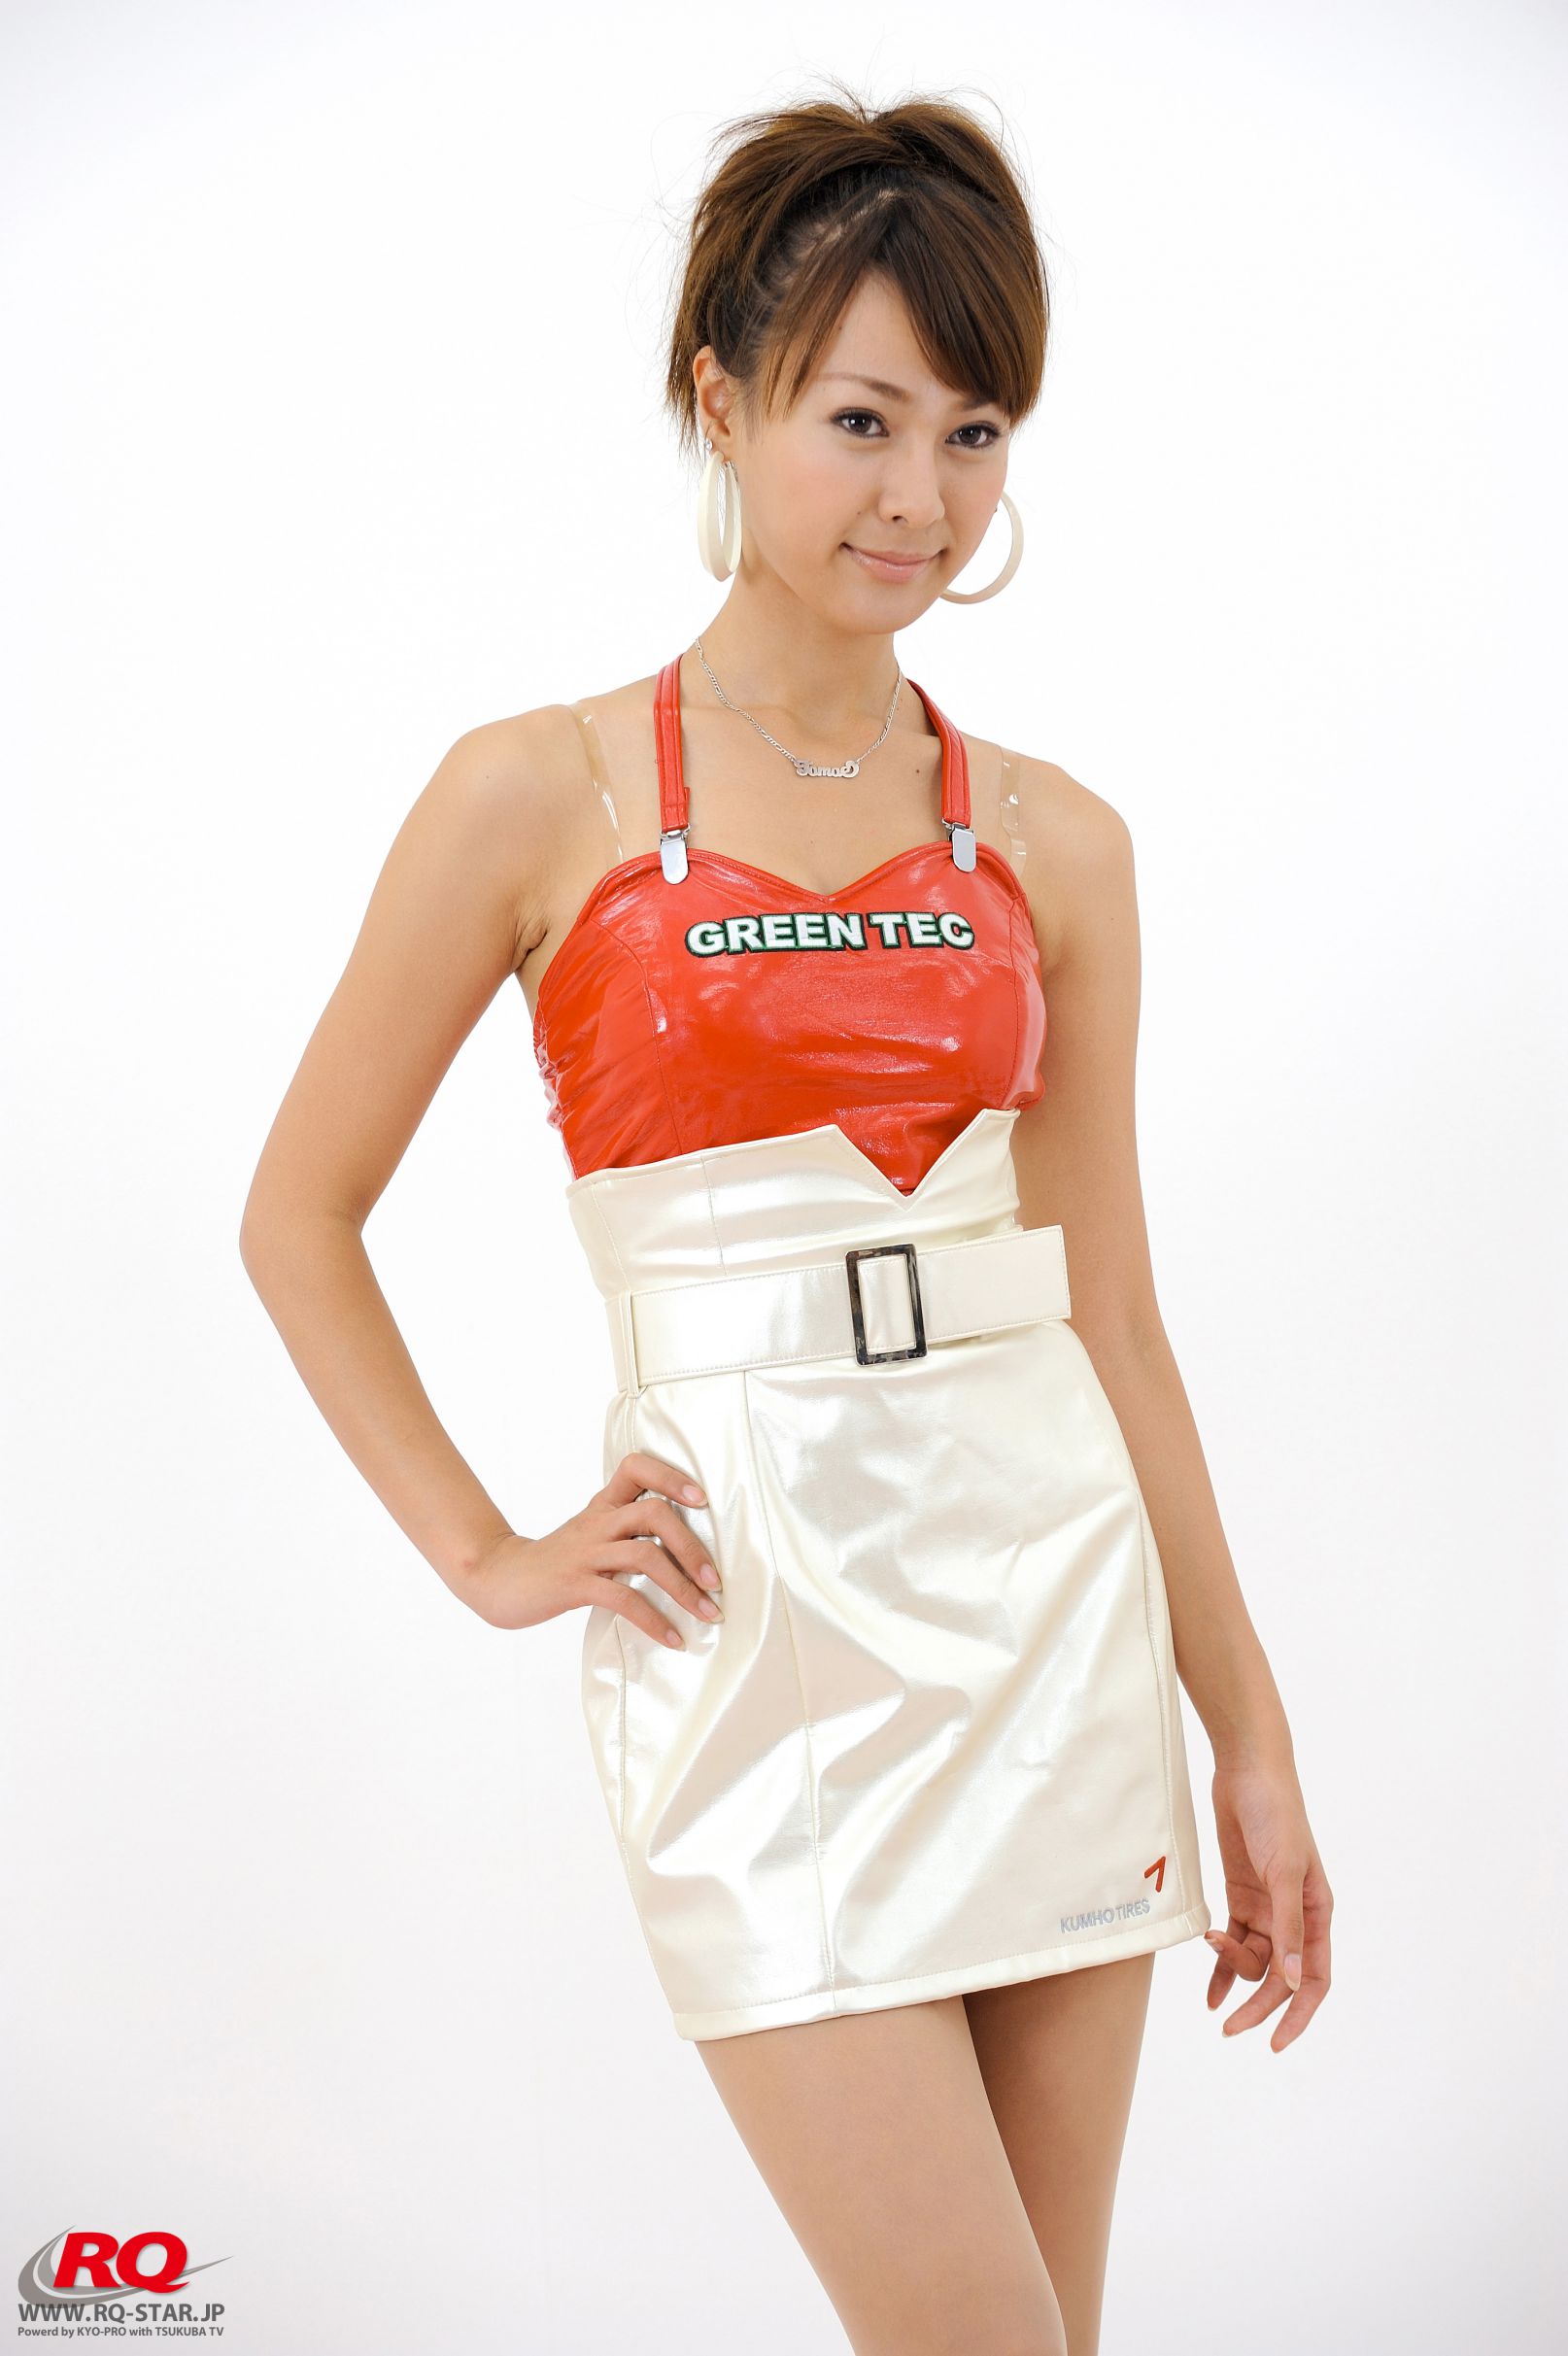 [RQ-STAR] NO.00067 中川知映 Race Queen – 2008 Green Tec  写真集3